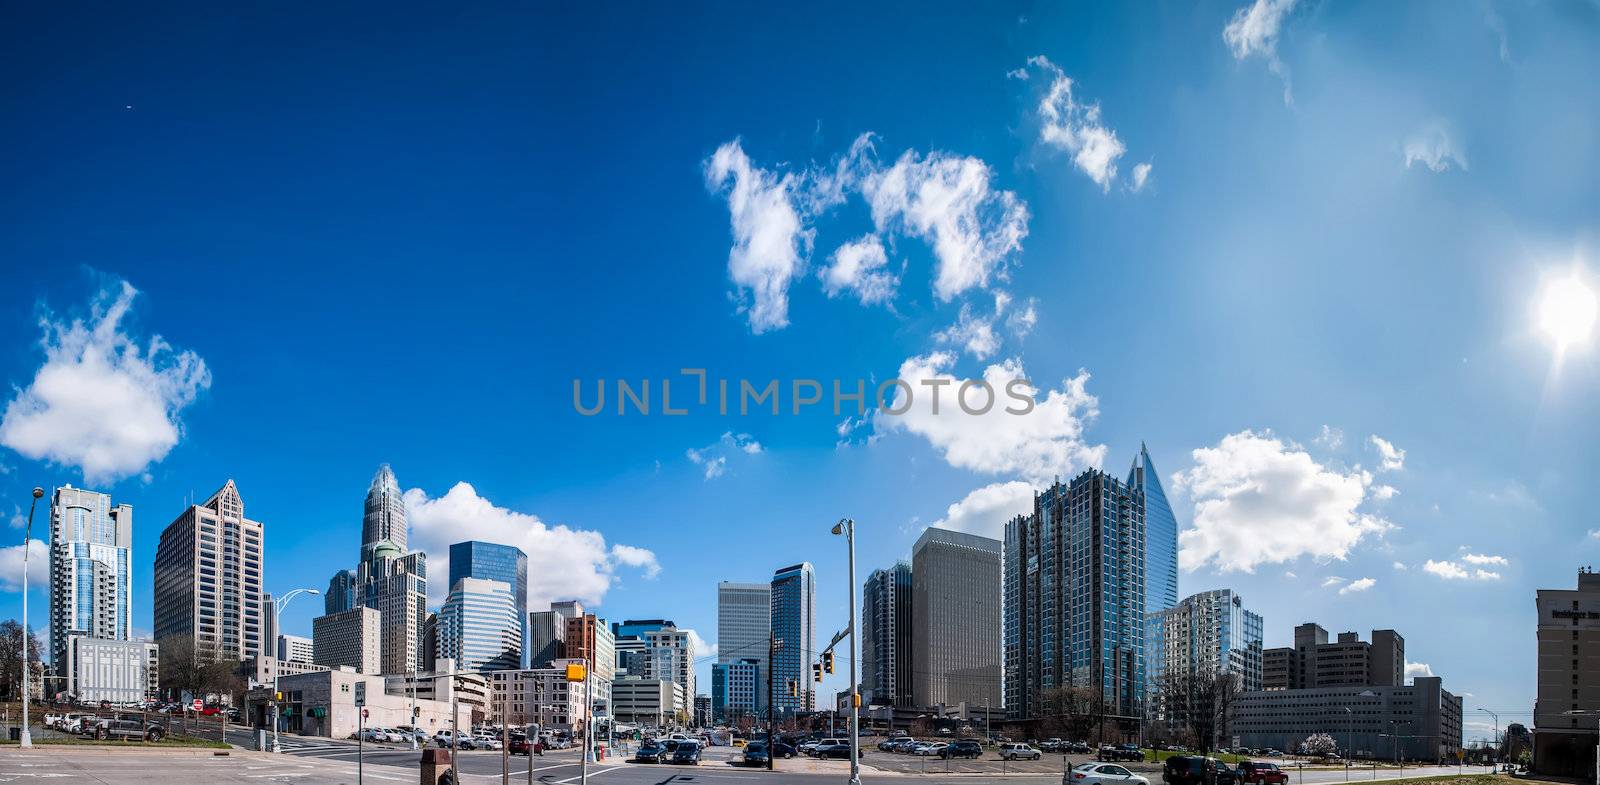 Skyline of Uptown Charlotte, North Carolina. by digidreamgrafix